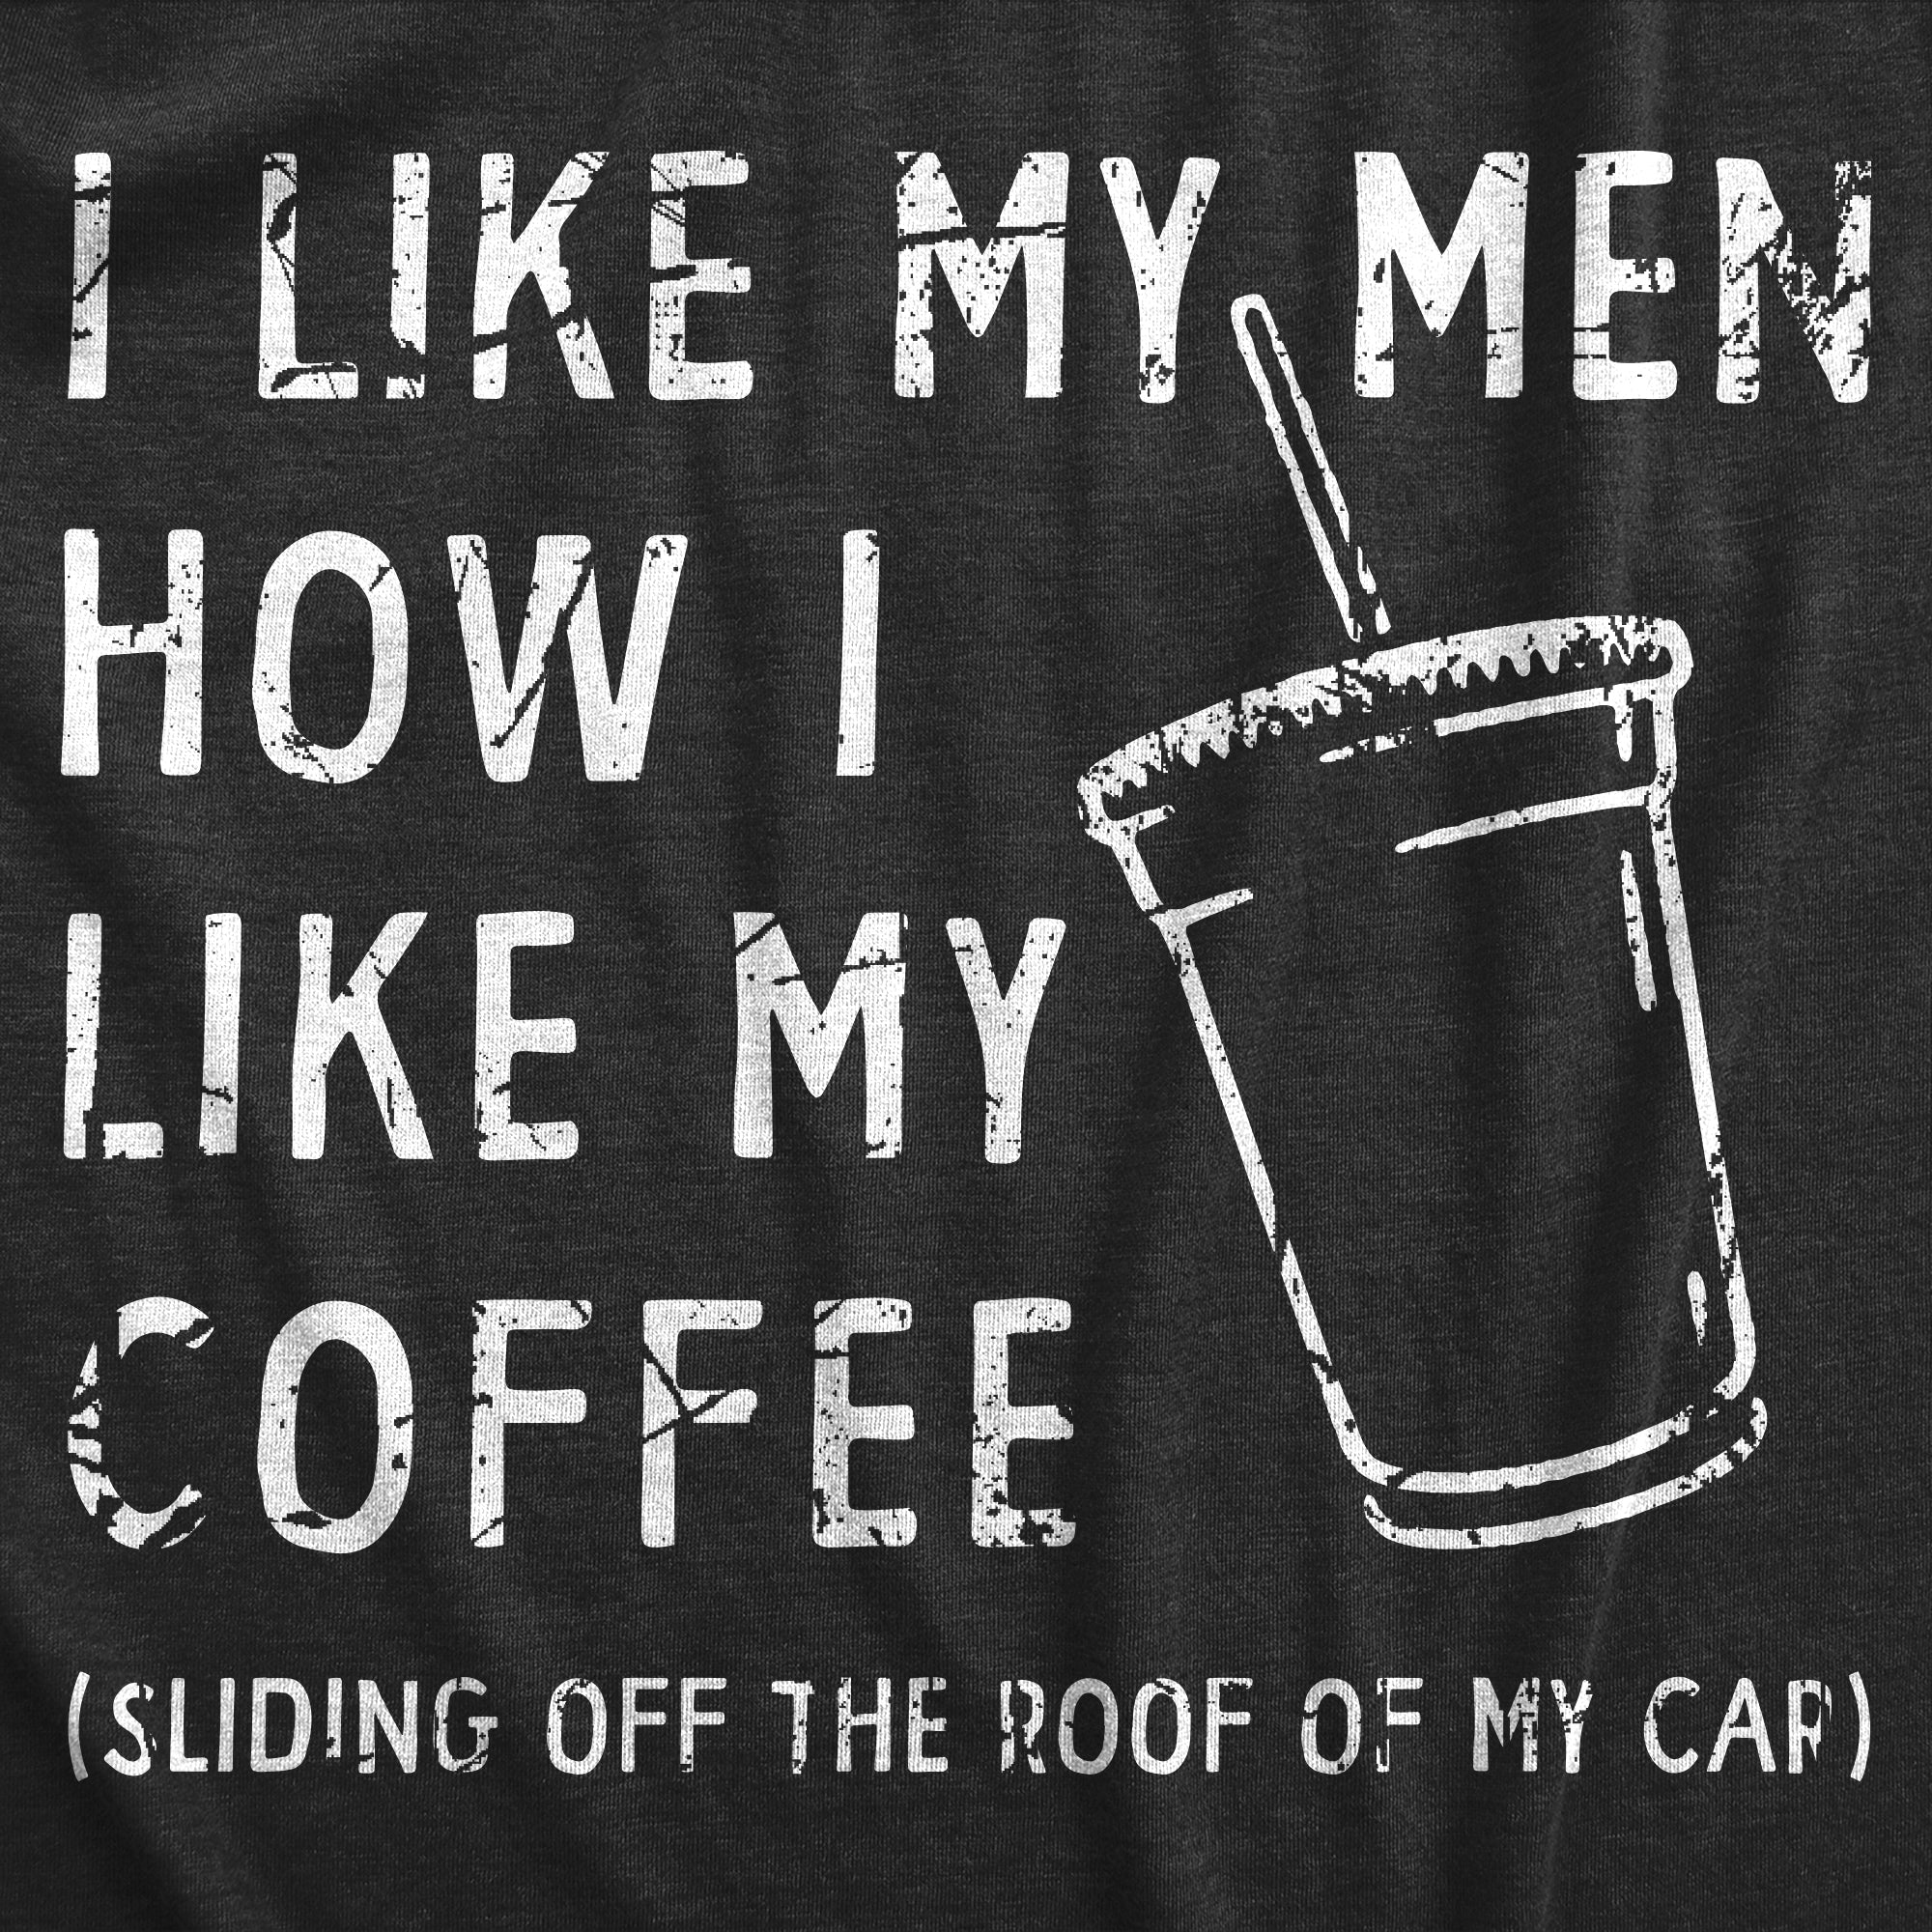 Funny Heather Black - ROOF I Like My Men How I Like My Coffee Womens T Shirt Nerdy Coffee Sarcastic Tee